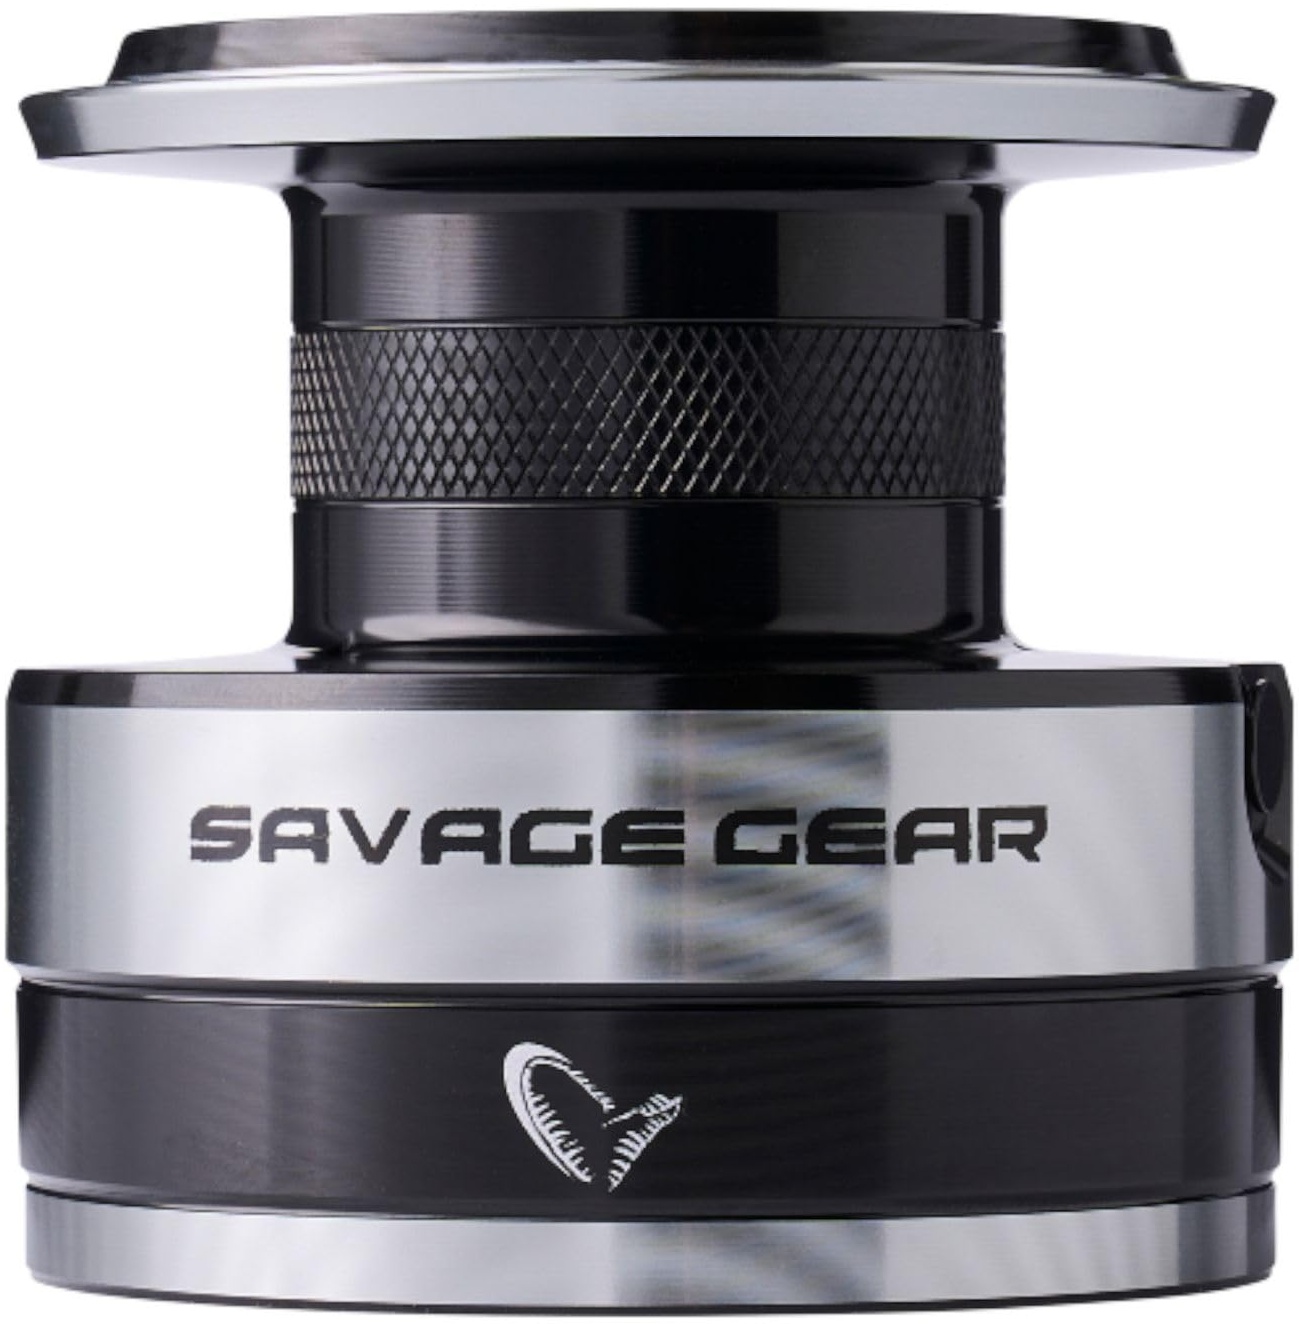 Savage Gear SGS6 8000 FD Spare Spool - Reservespule für Meeresrollen, Ersatzspule für Angelrollen, Rollenspule, Spule